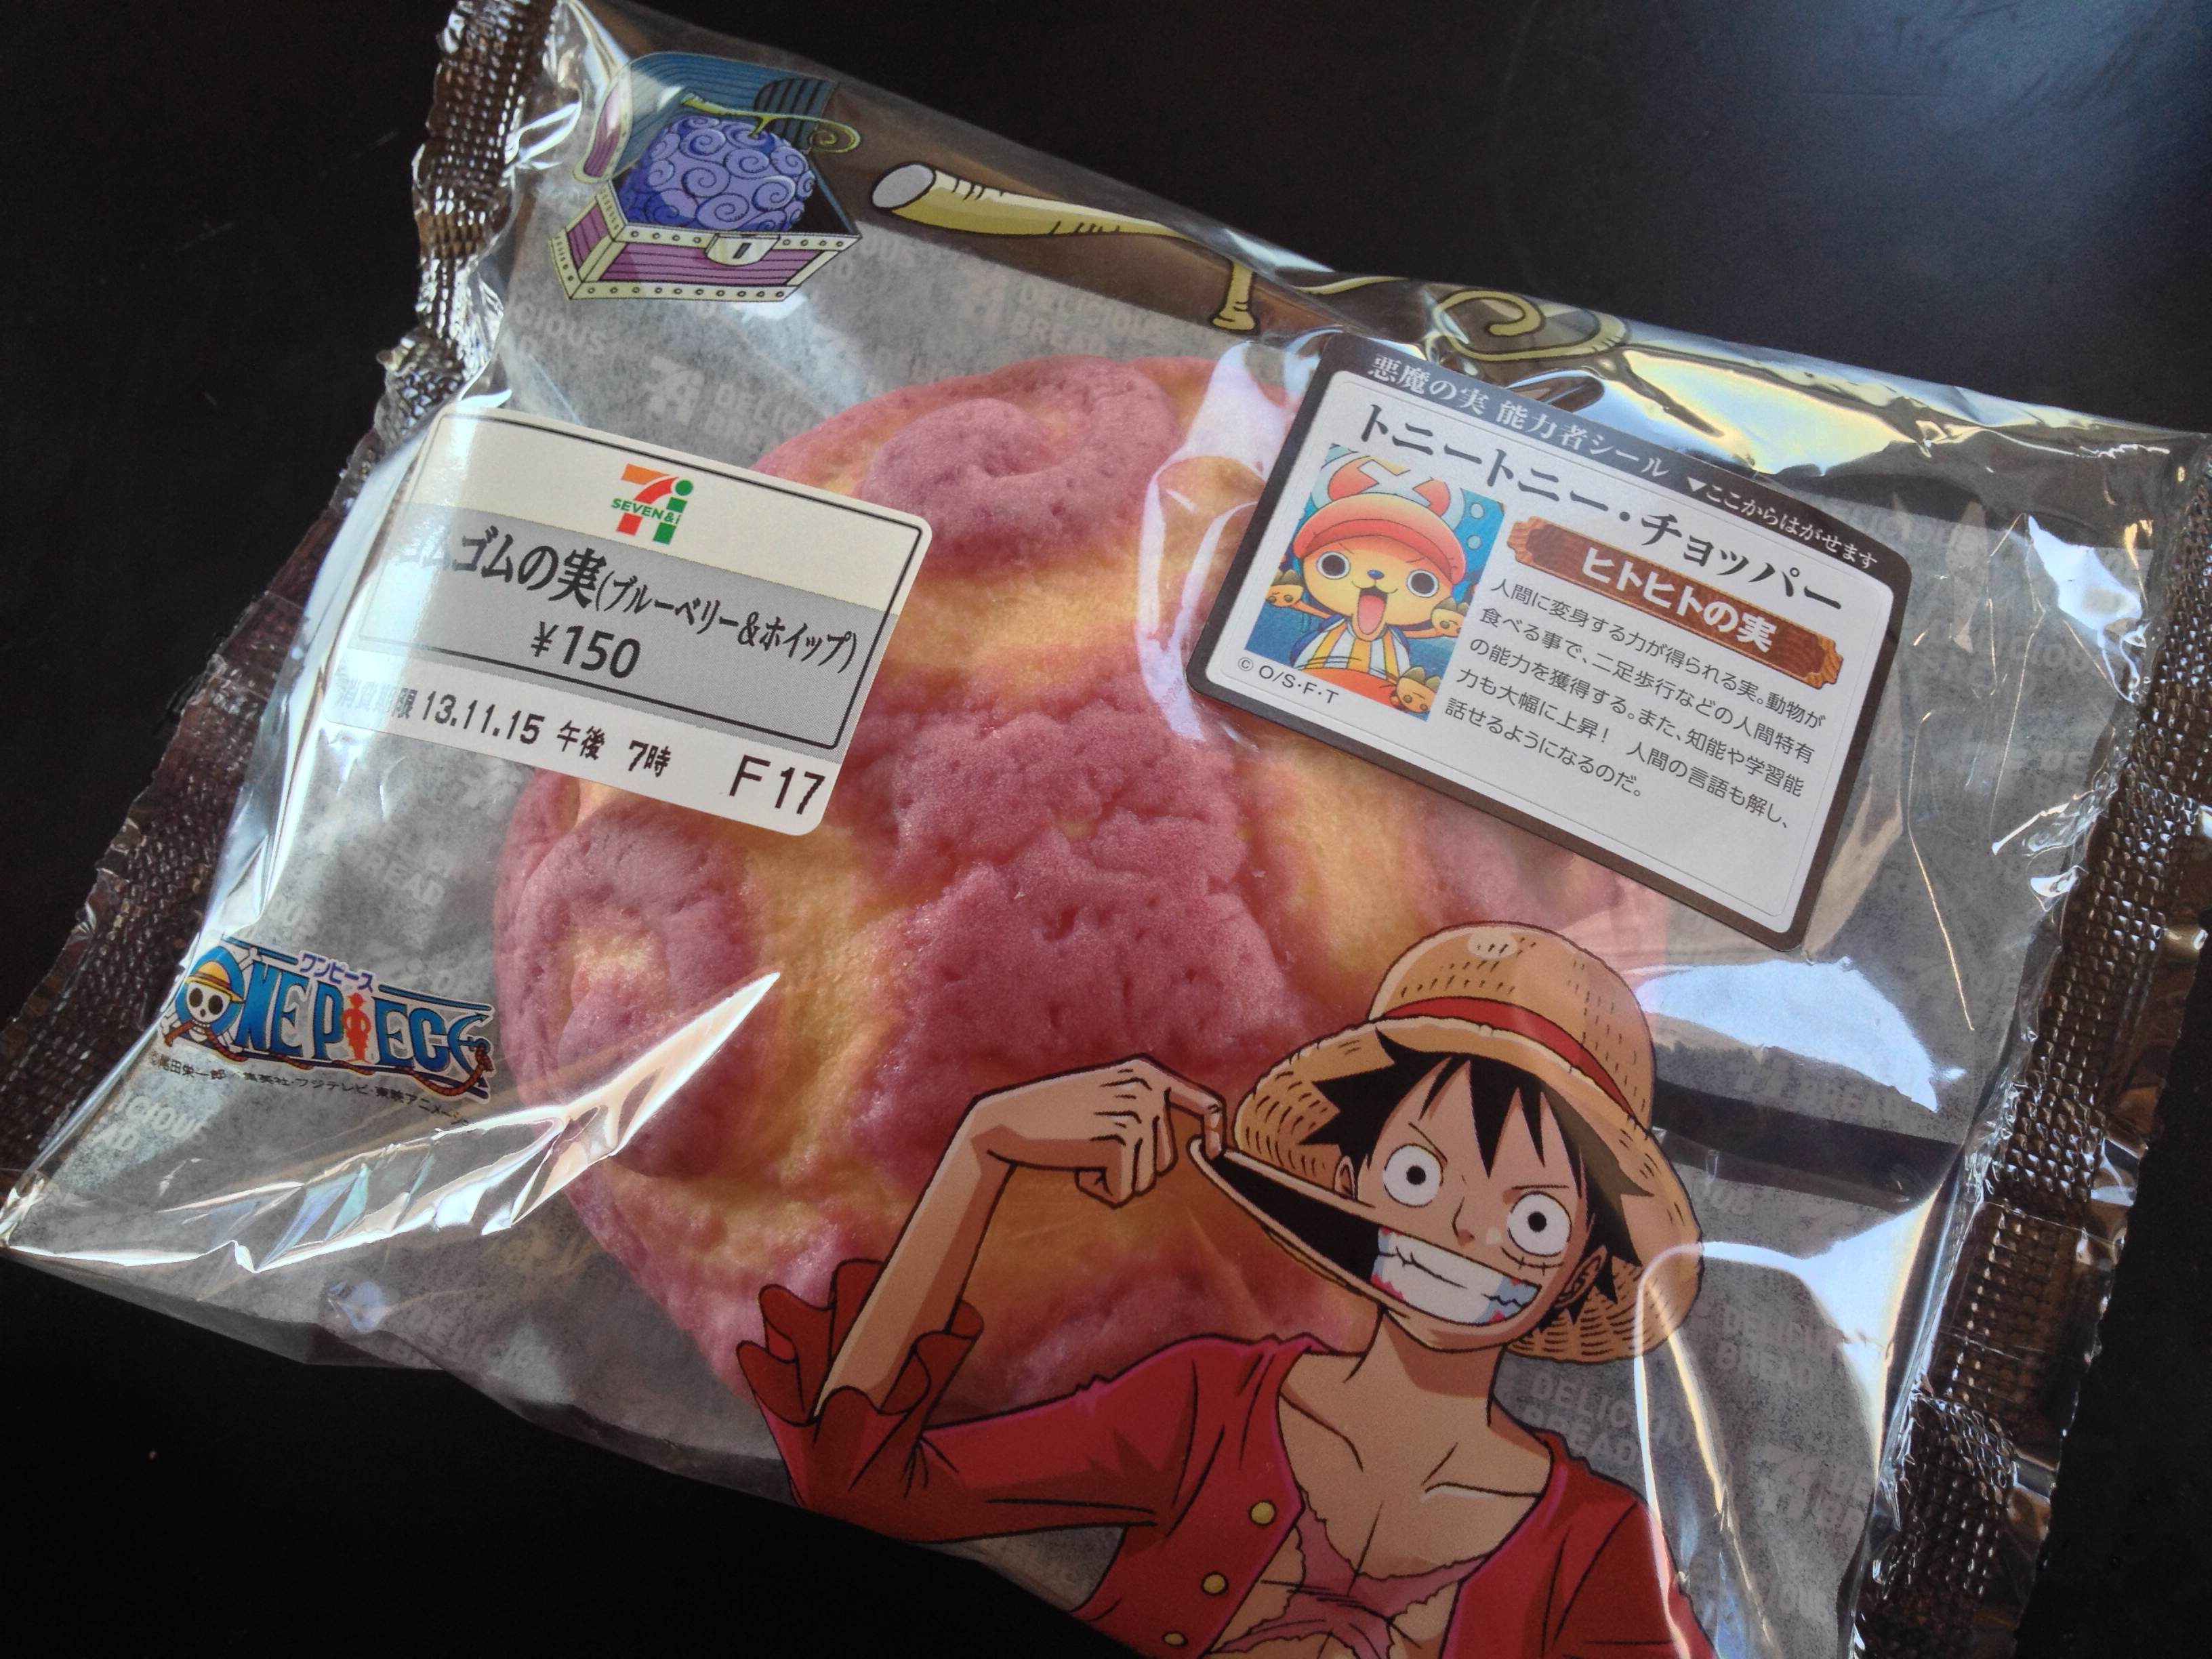 Eleven S One Piece Gomu No Mi Looks Kind Of Like An